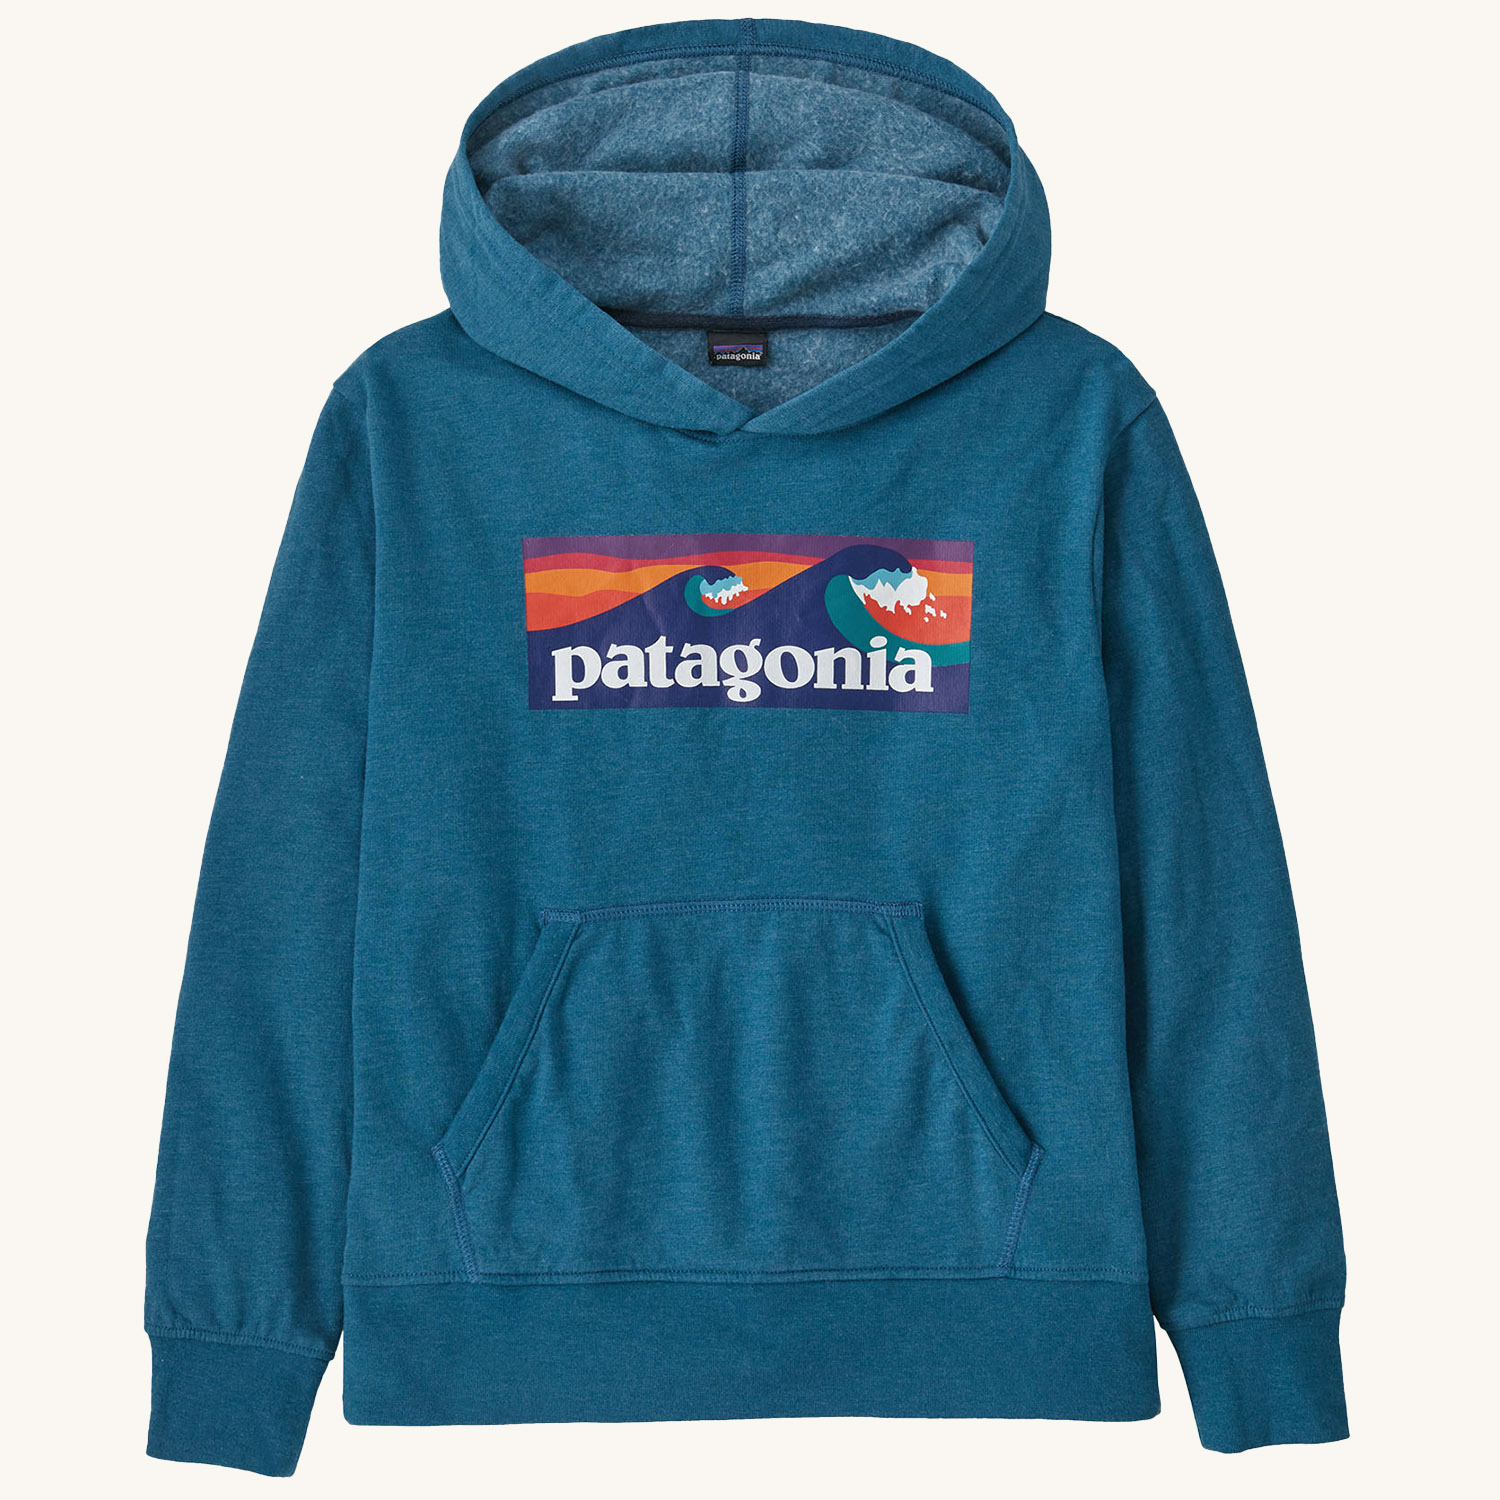 Patagonia Kids' Lightweight Graphic Hoody Sweatshirt - Boardshort Logo: Wavy Blue